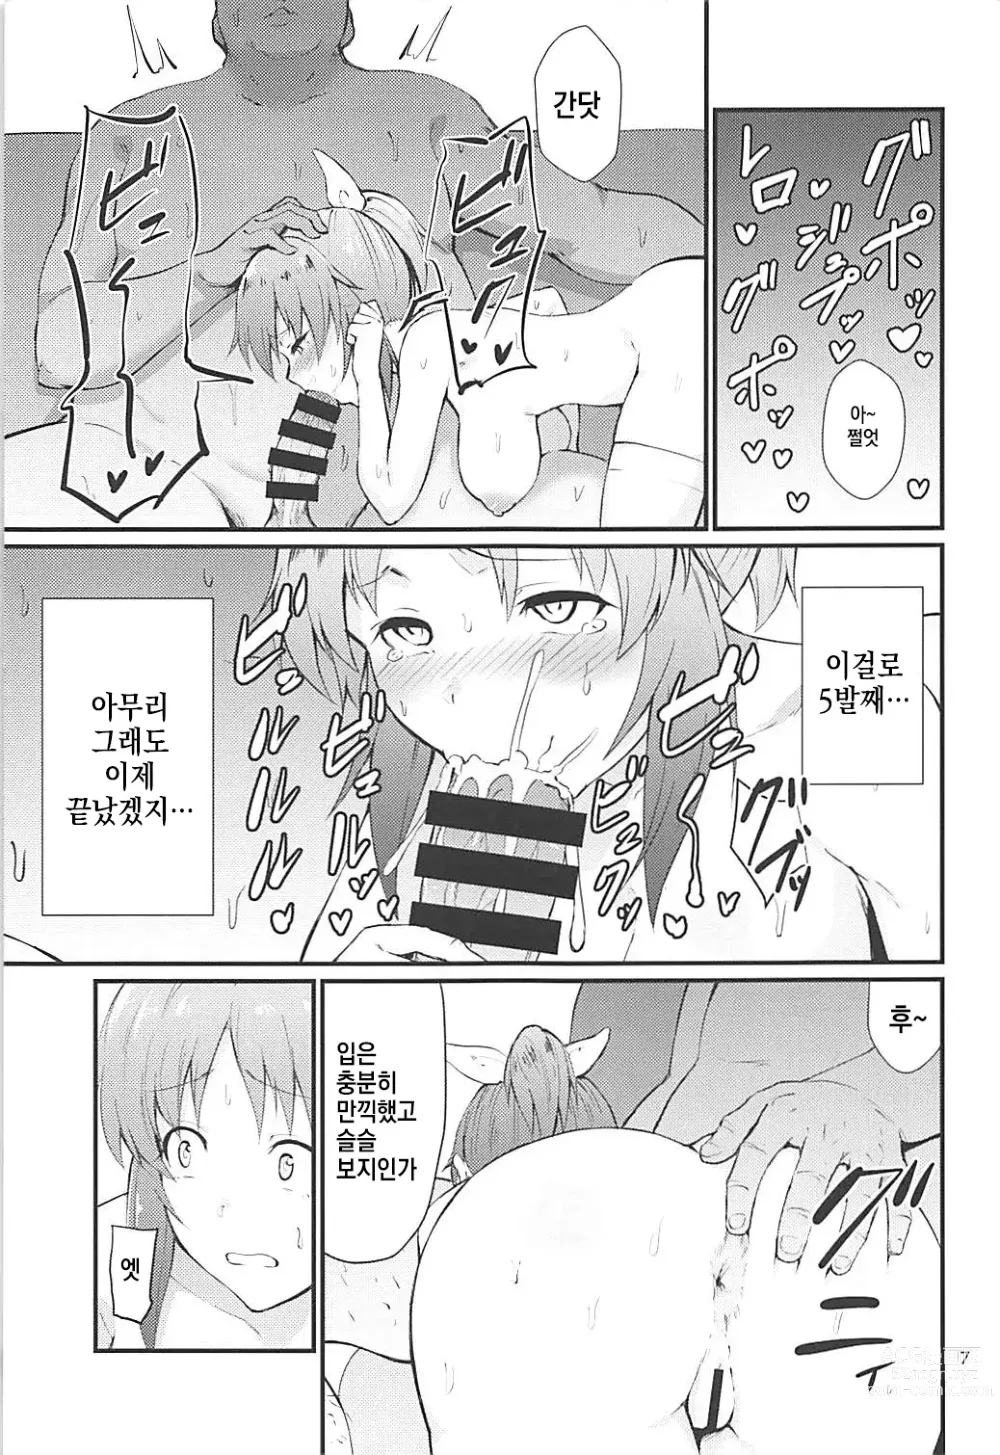 Page 6 of doujinshi 나나간